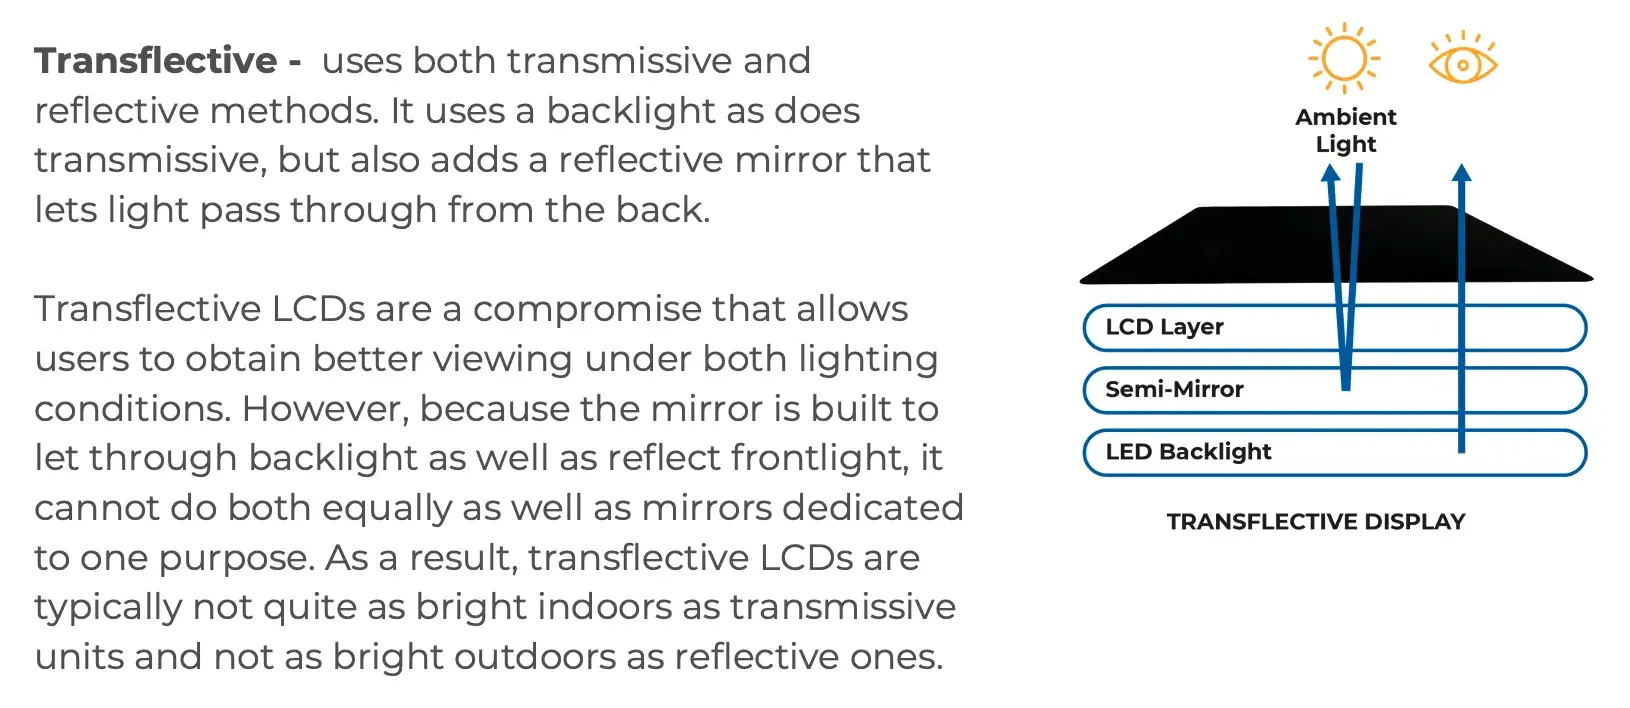 Transflective LCD displays